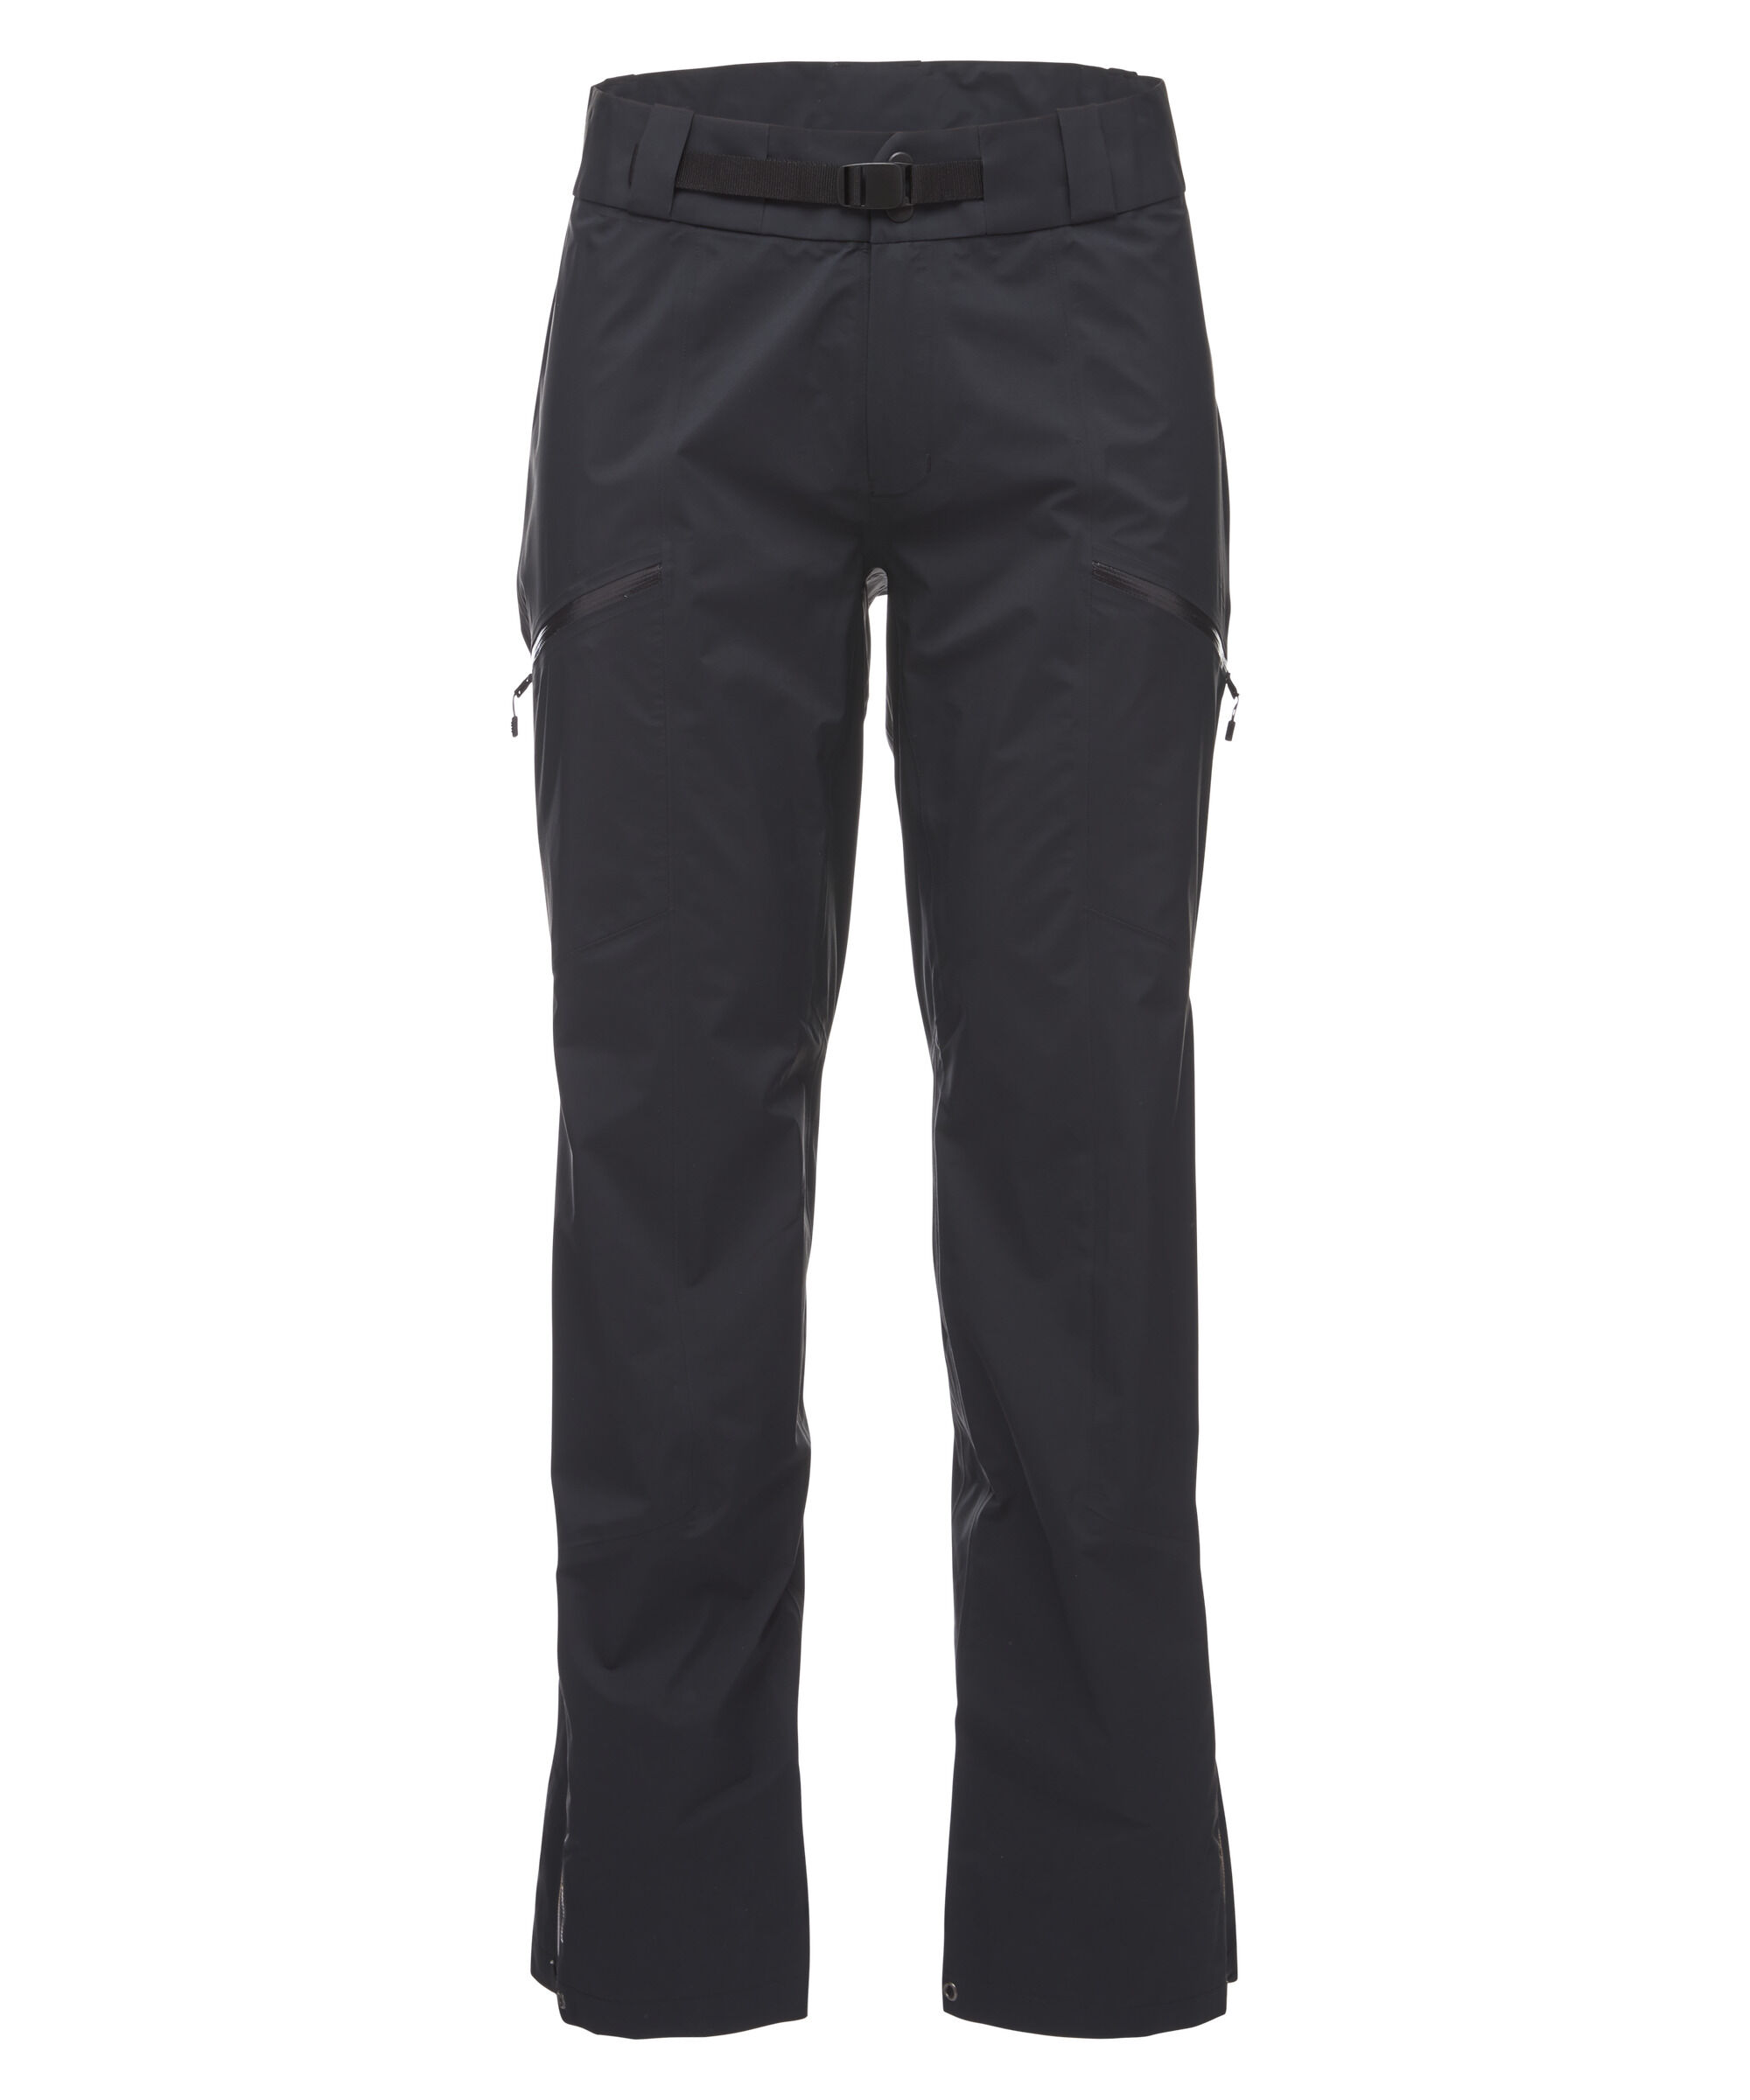 Black Diamond - Helio Active Pants - Ski trousers - Men's